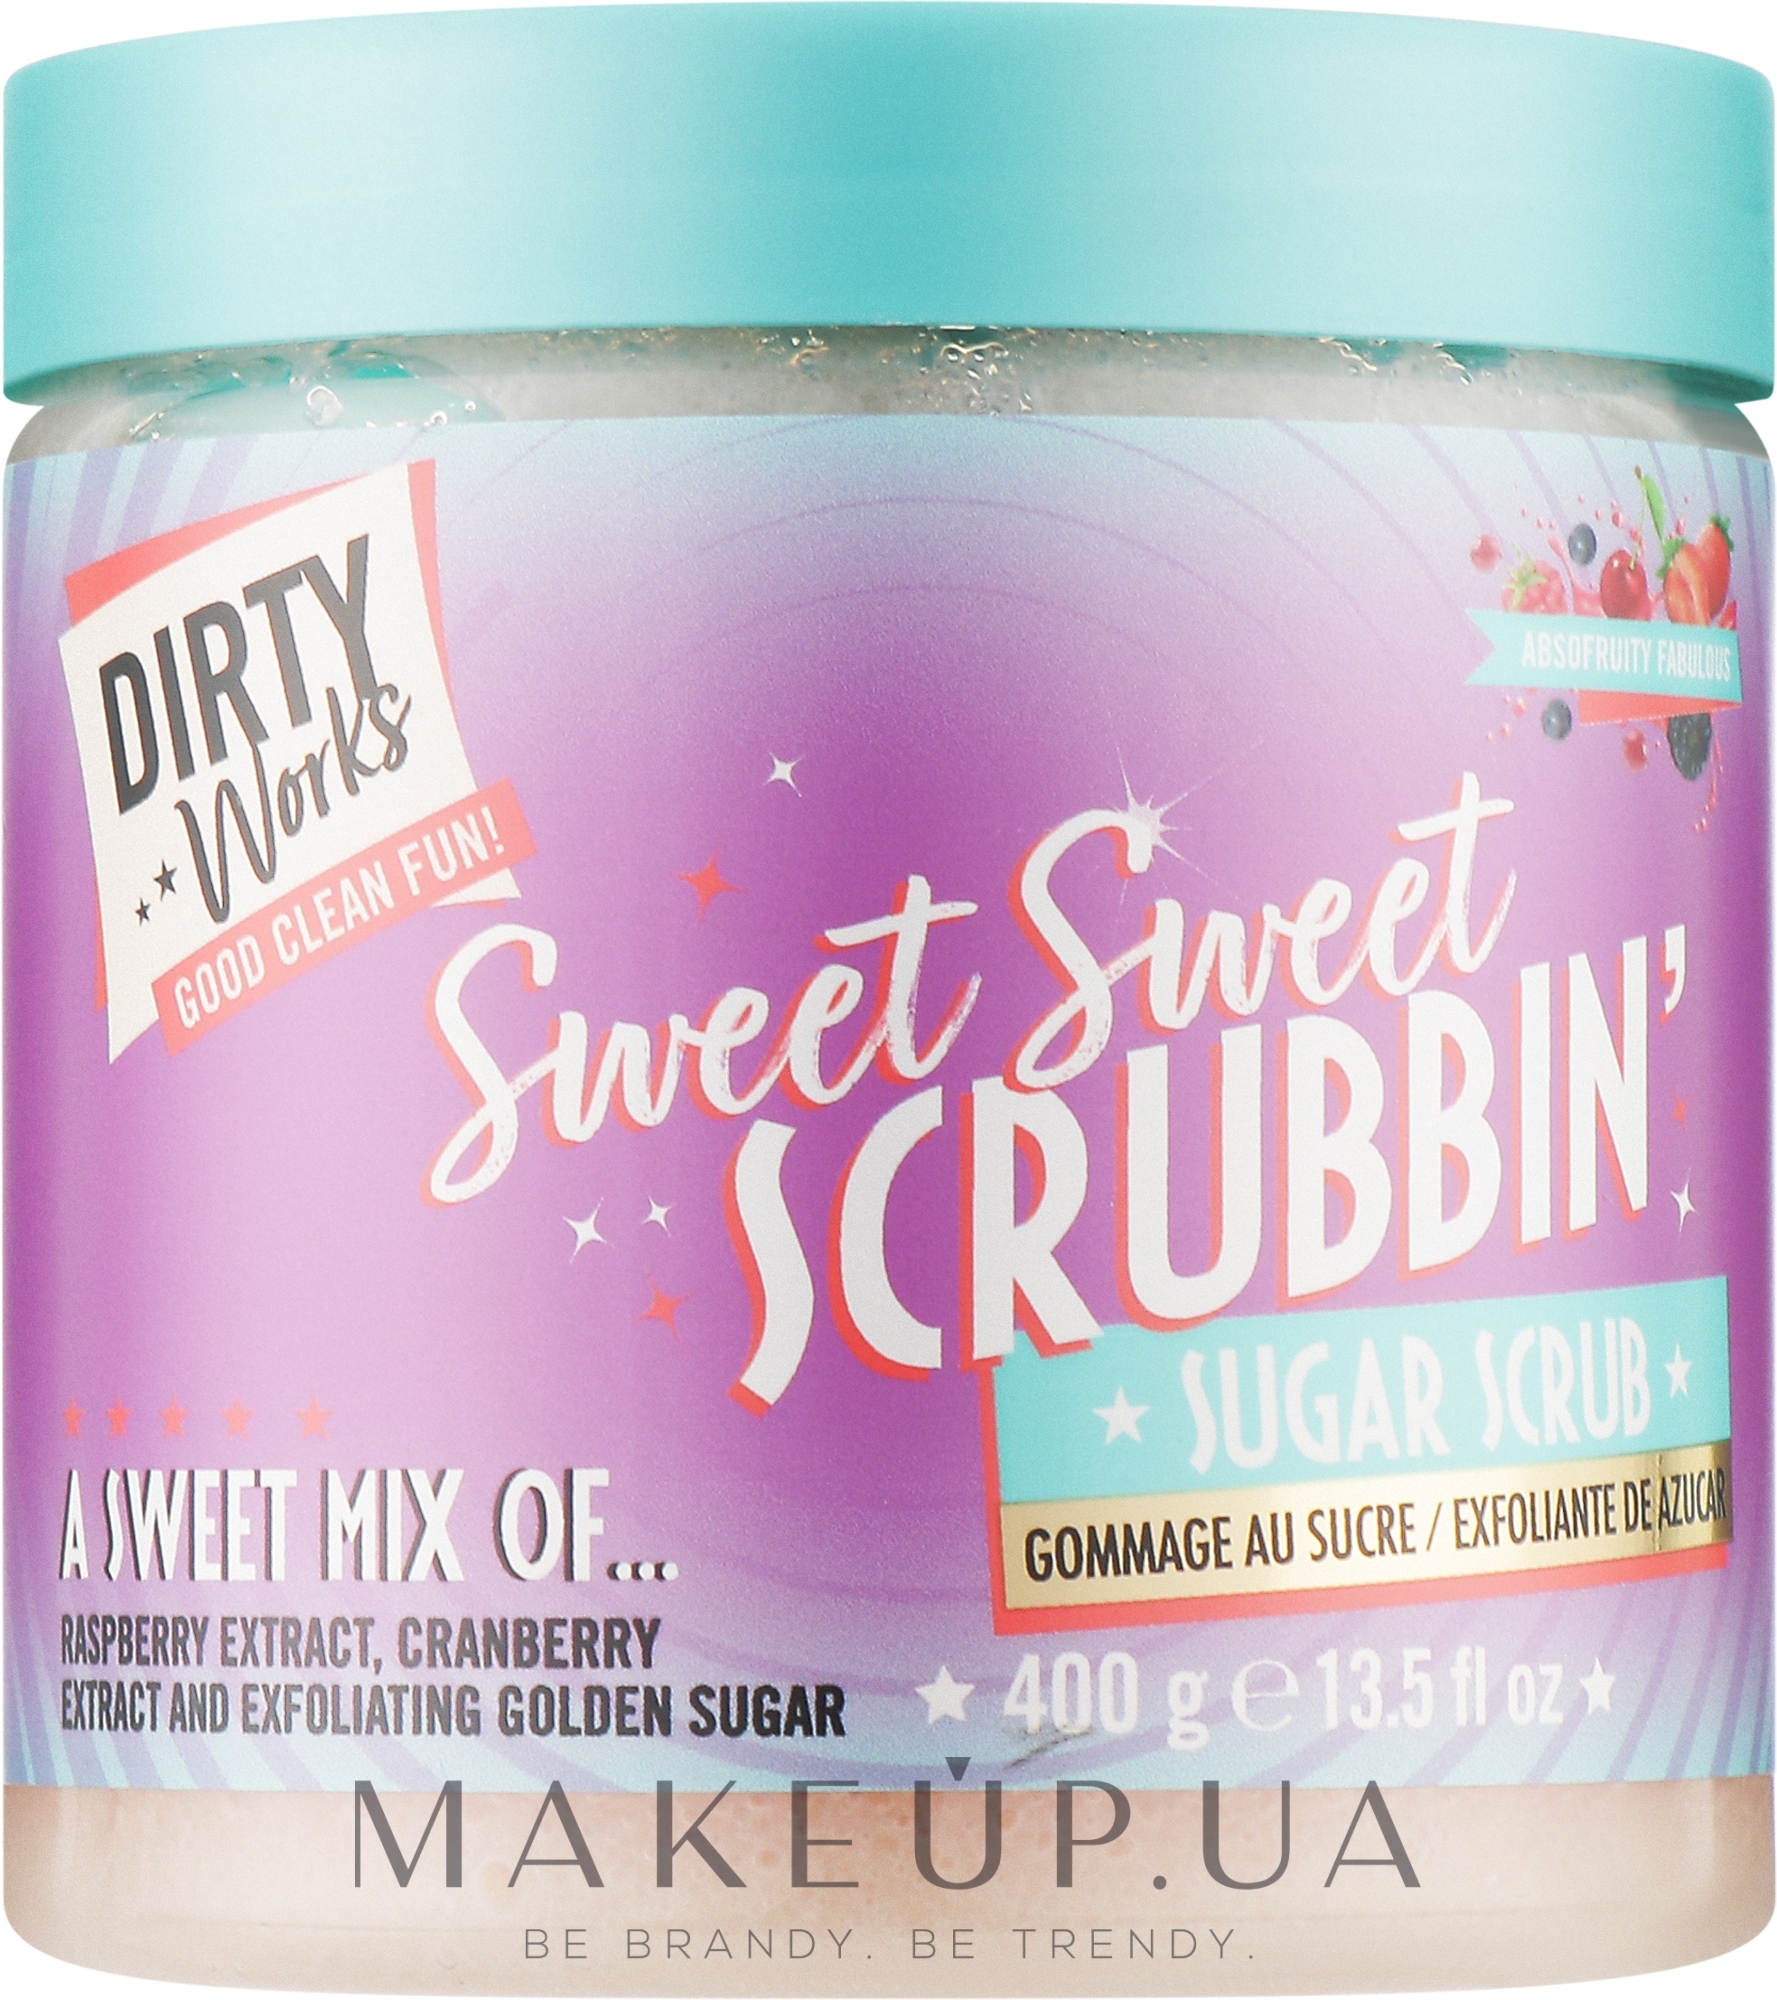 Цукровий скраб для тіла - Dirty Works Sweet Sweet Scrubbin Fruity — фото 400g